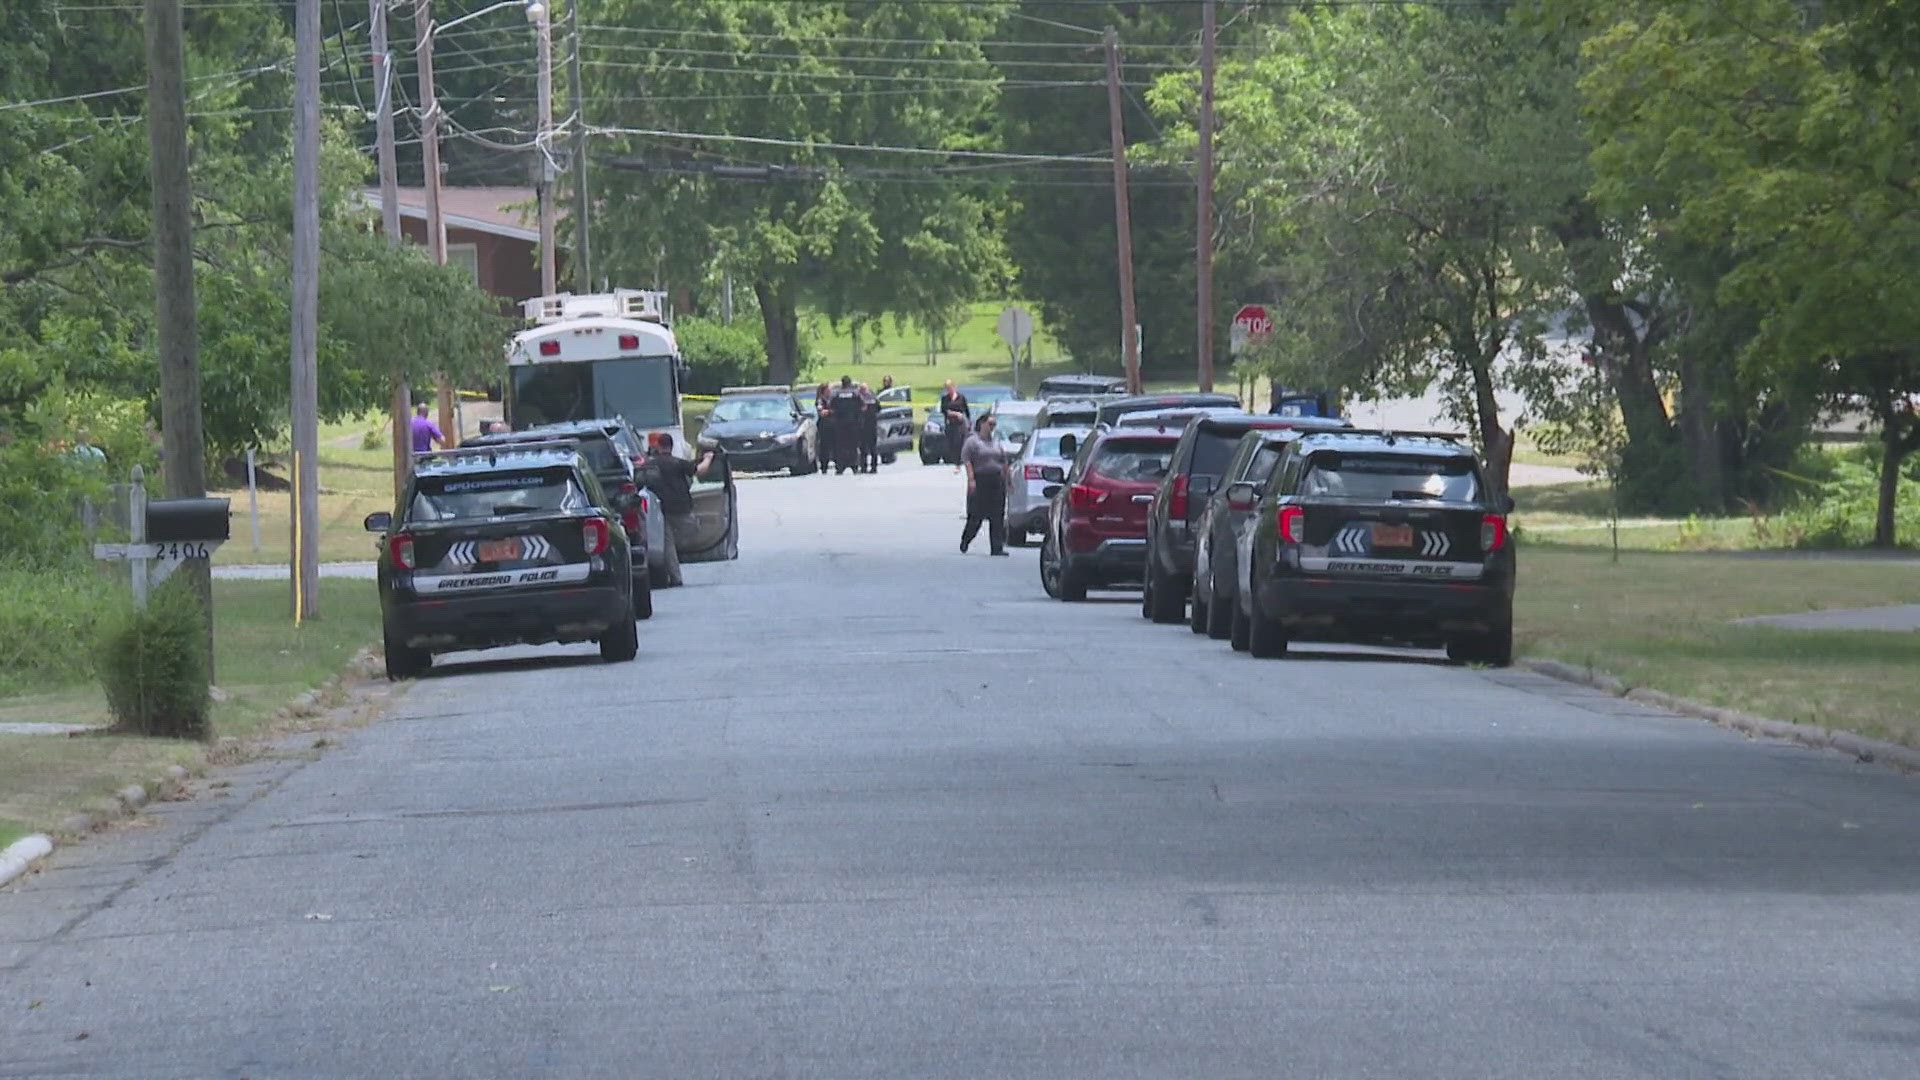 The shooting happened on Crestridge Road in Greensboro